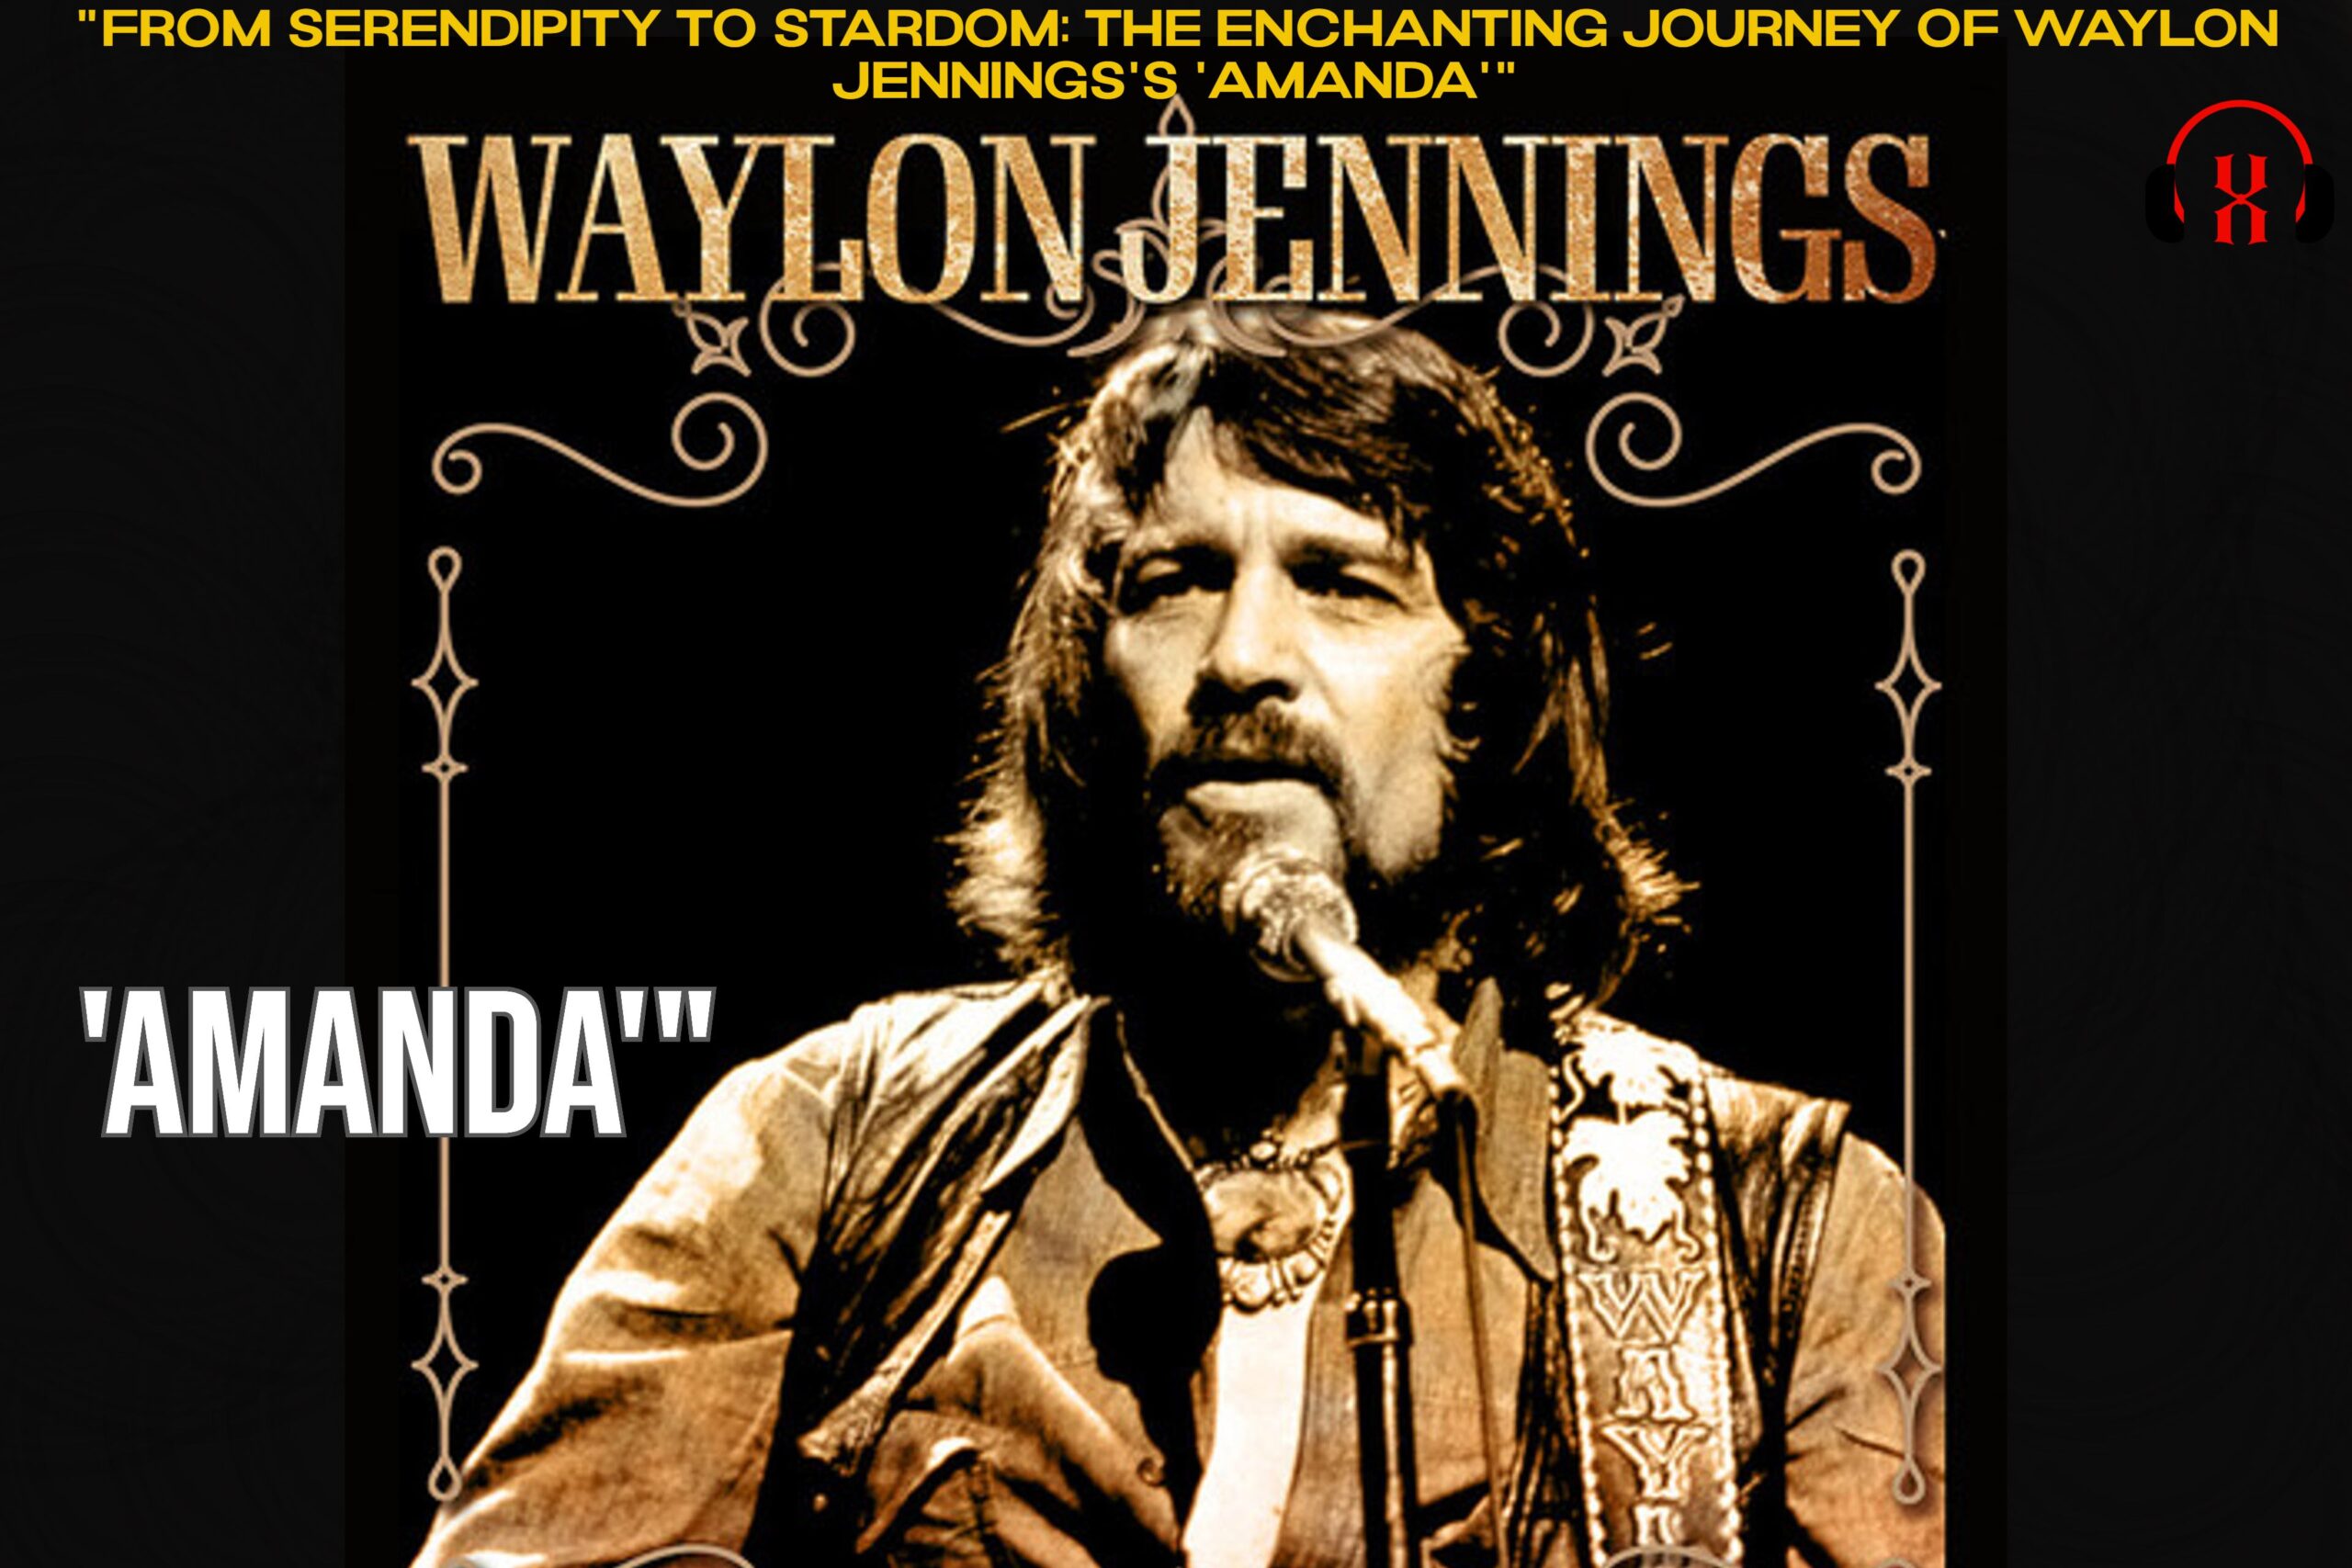 "From Serendipity to Stardom: The Enchanting Journey of Waylon Jennings's 'Amanda'"